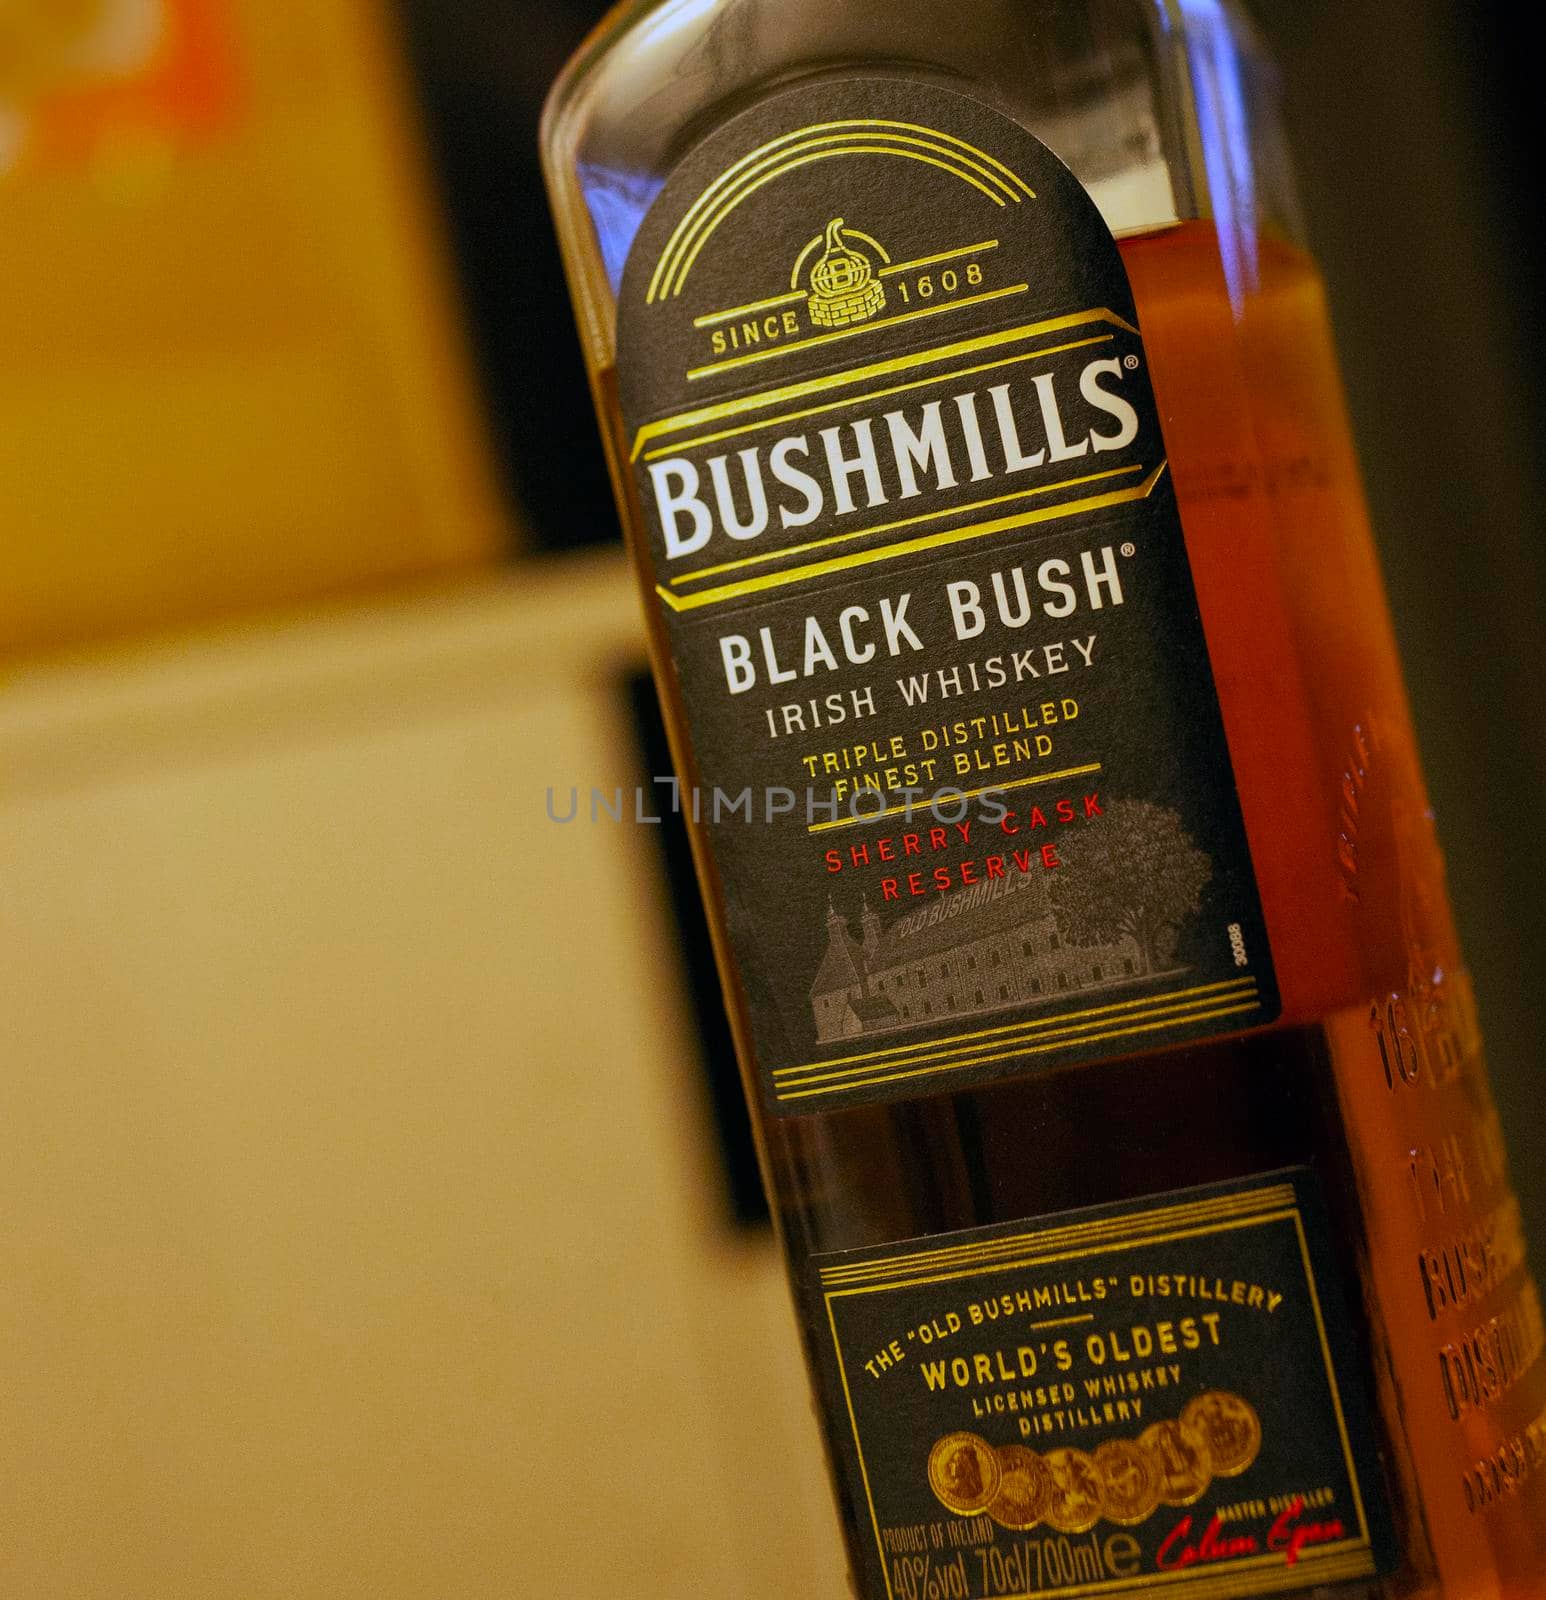 Bottle of Bushmills Original Irish whiskey, product of Old Bushmills by SlayCer